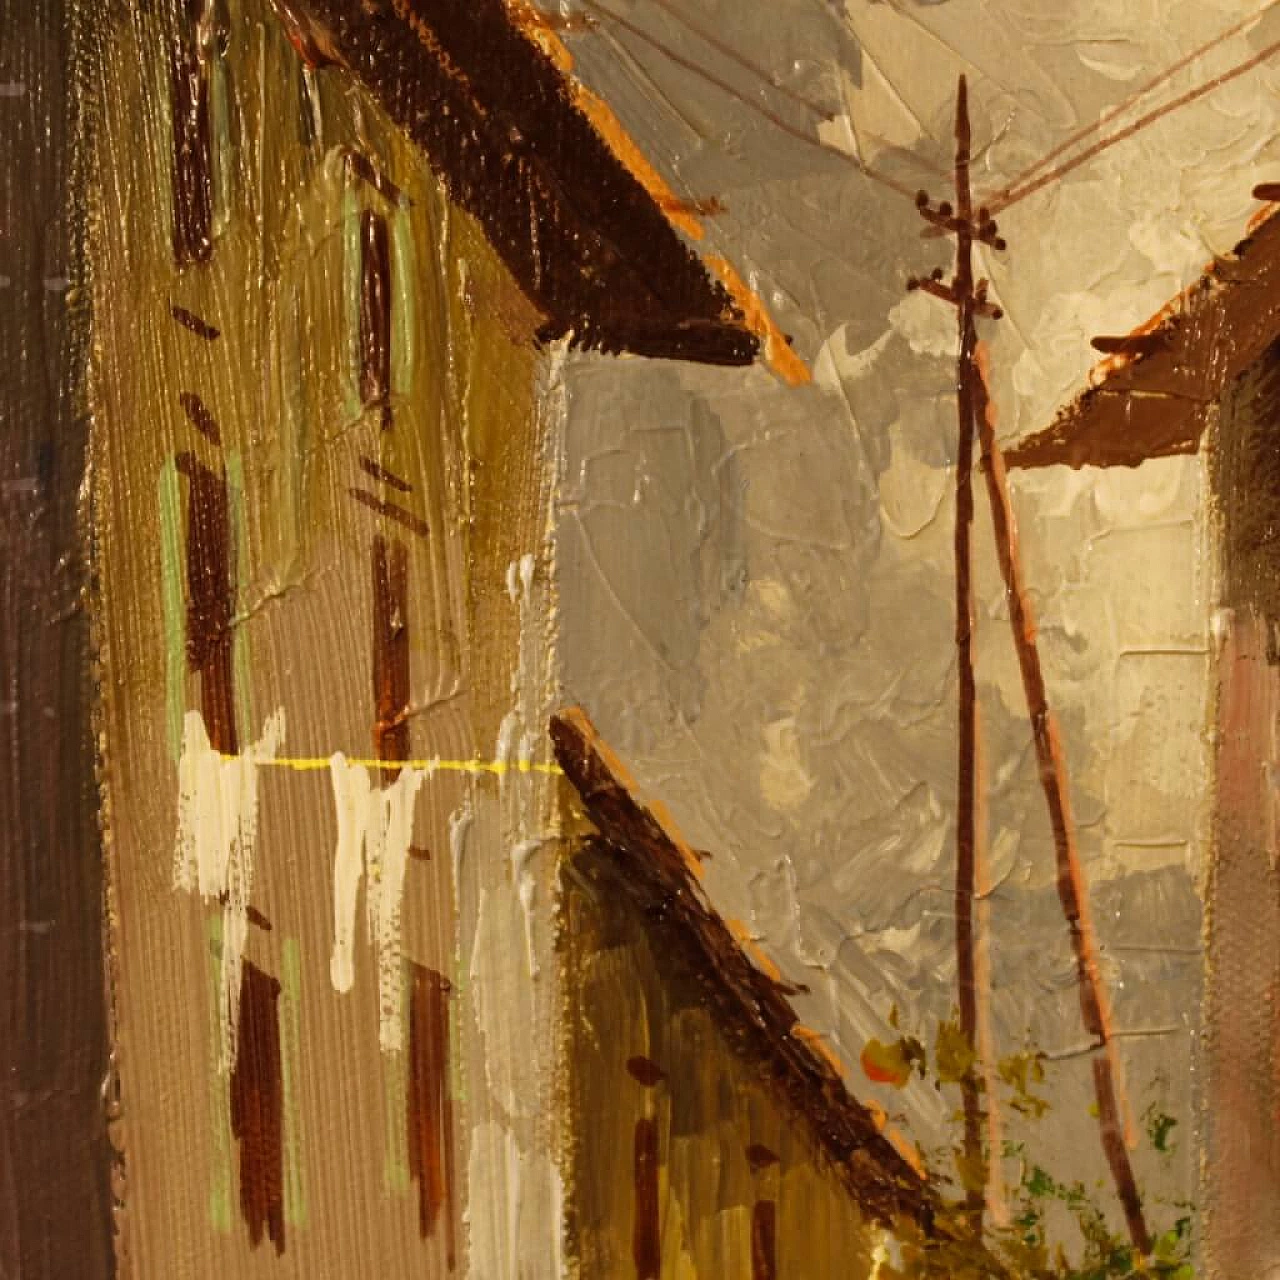 Veduta urbana in stile Impressionista, tecnica mista su tela 8